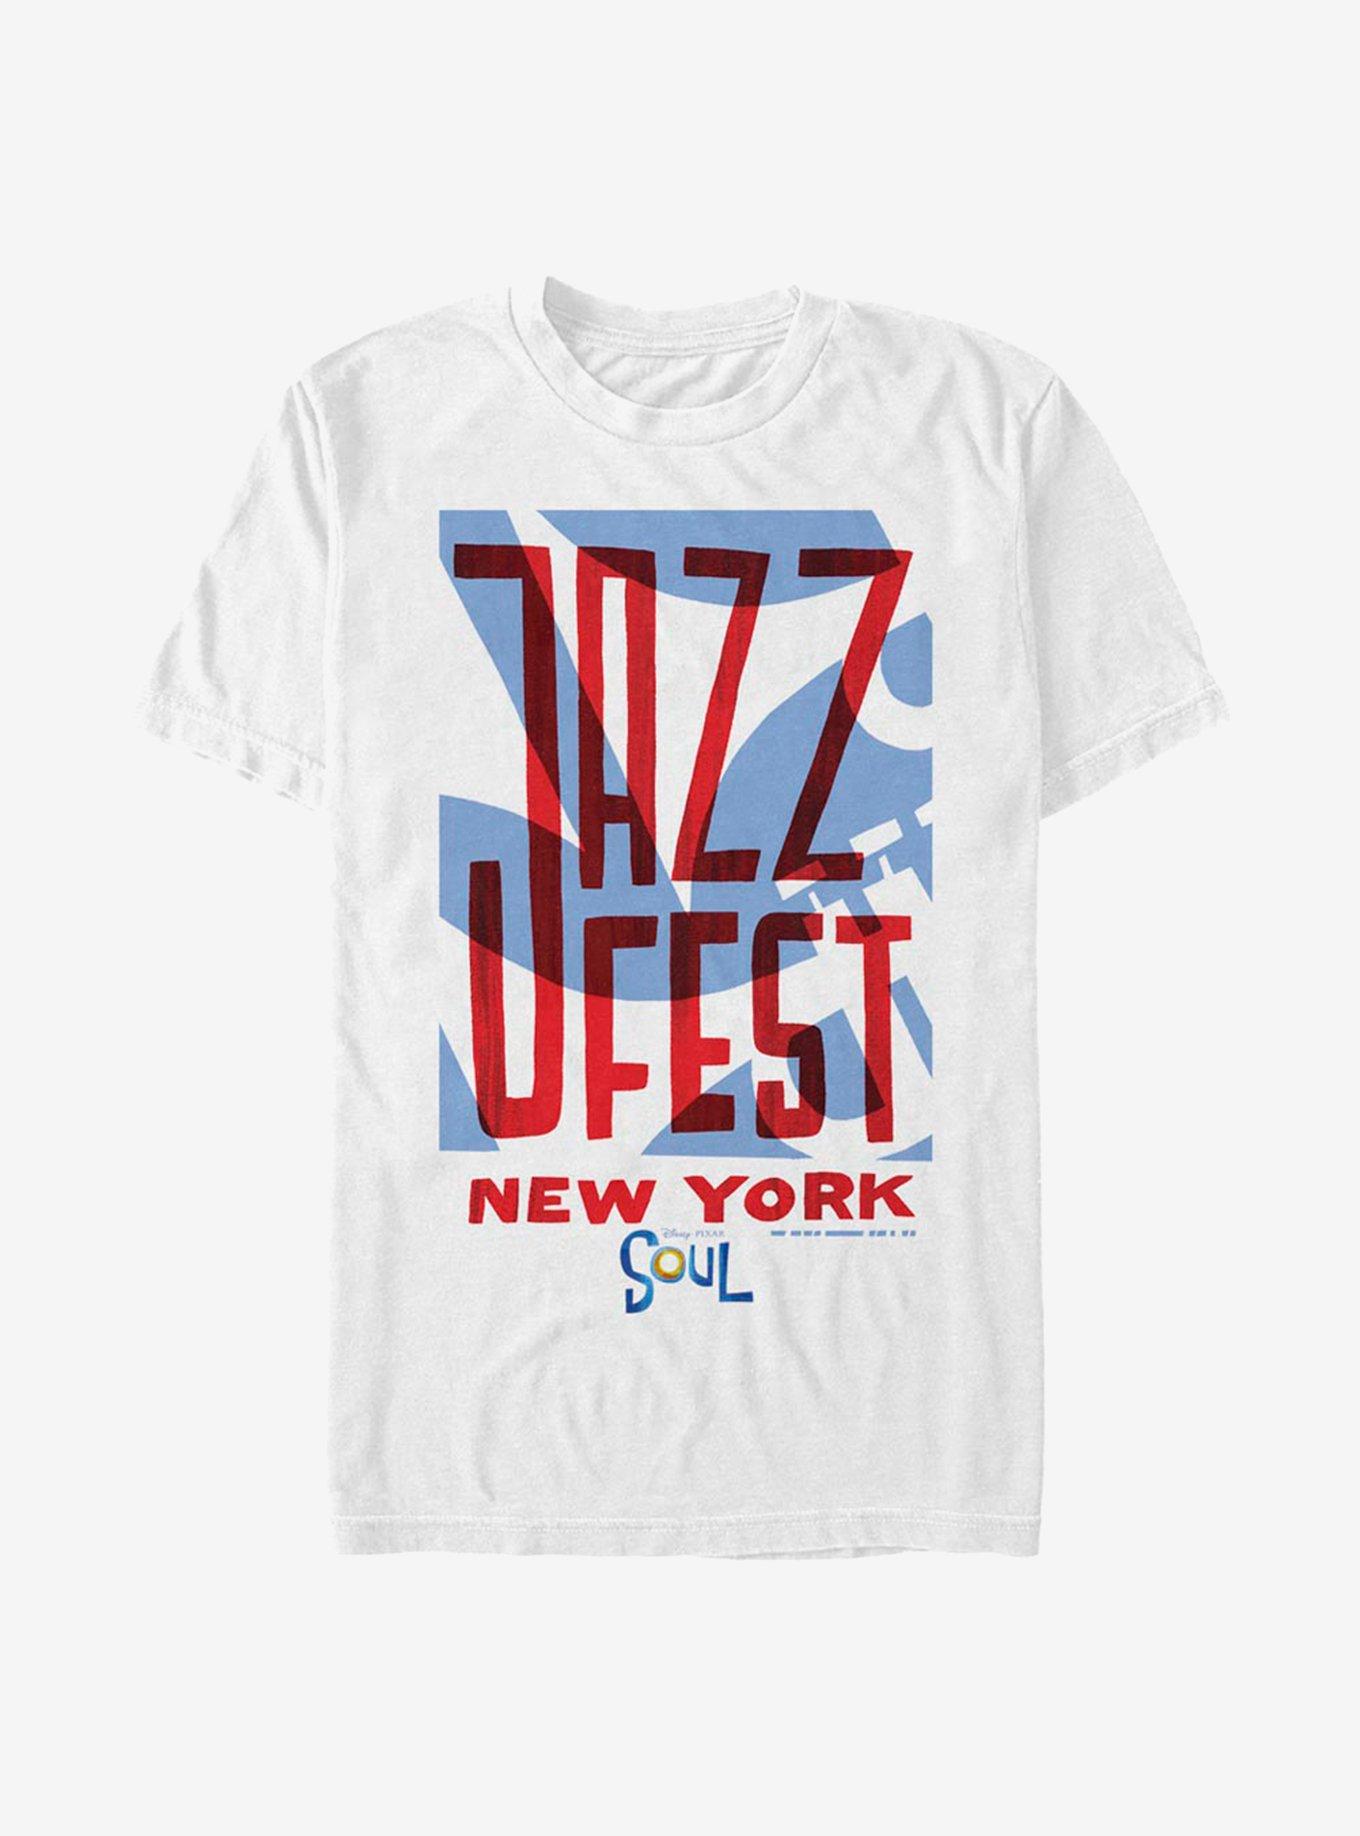 Disney Pixar Soul Jazz Fest T-Shirt, , hi-res